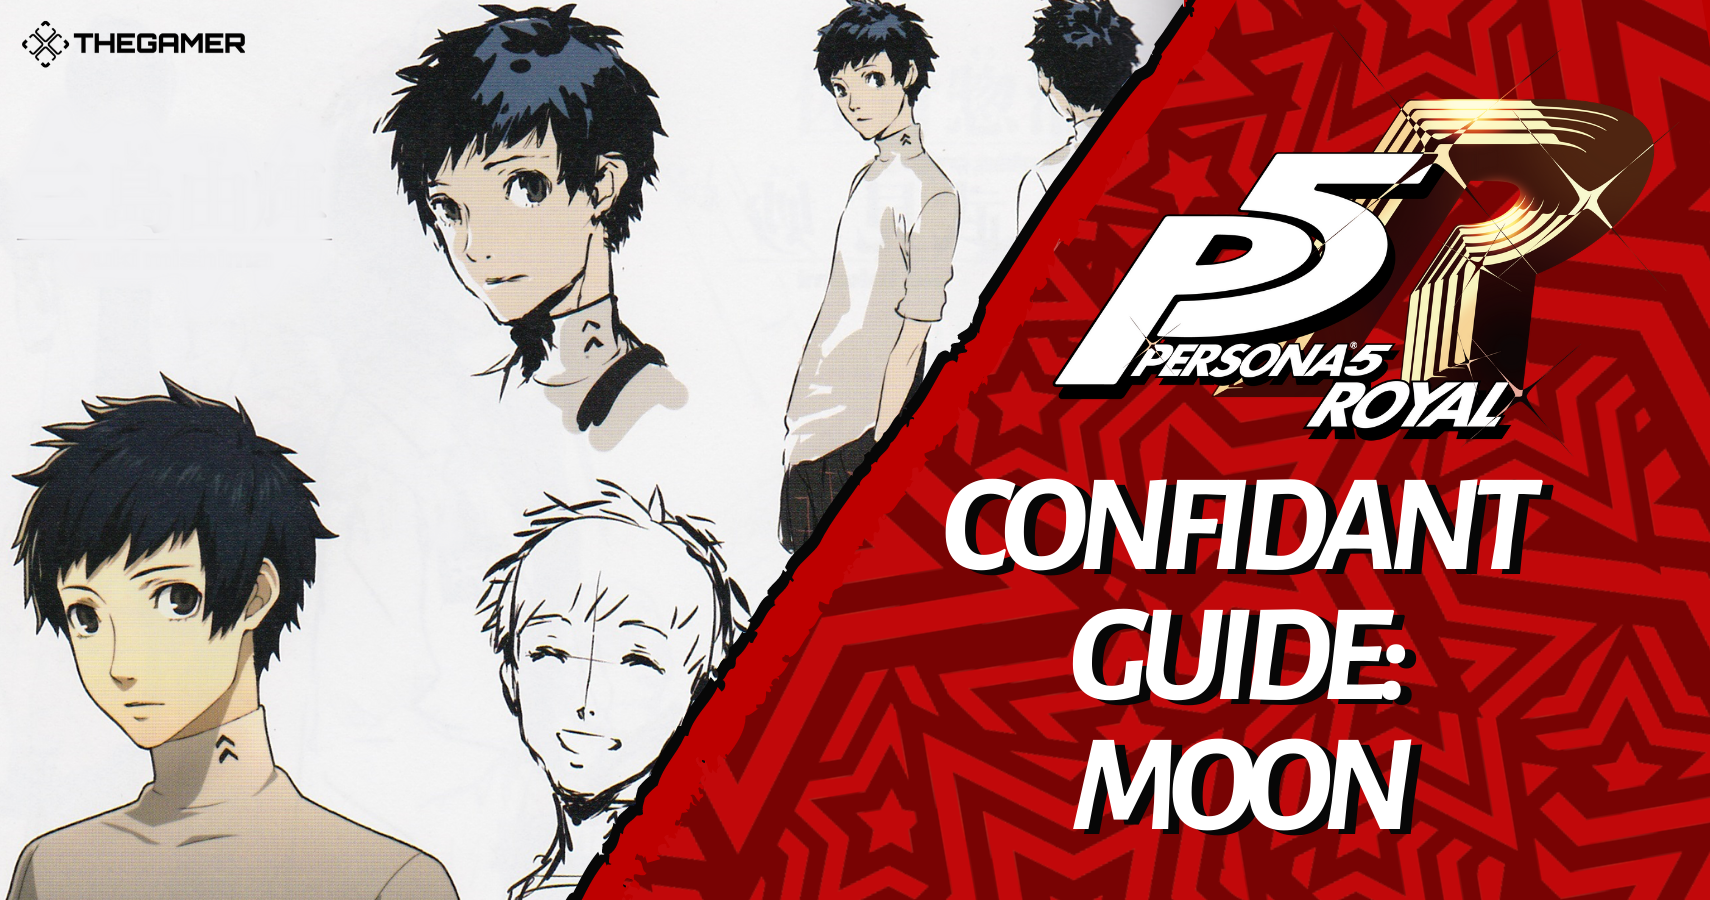 Persona 5 Royal Confidant Guide: Moon Yuuki Mishima. www.thegamer.com. 